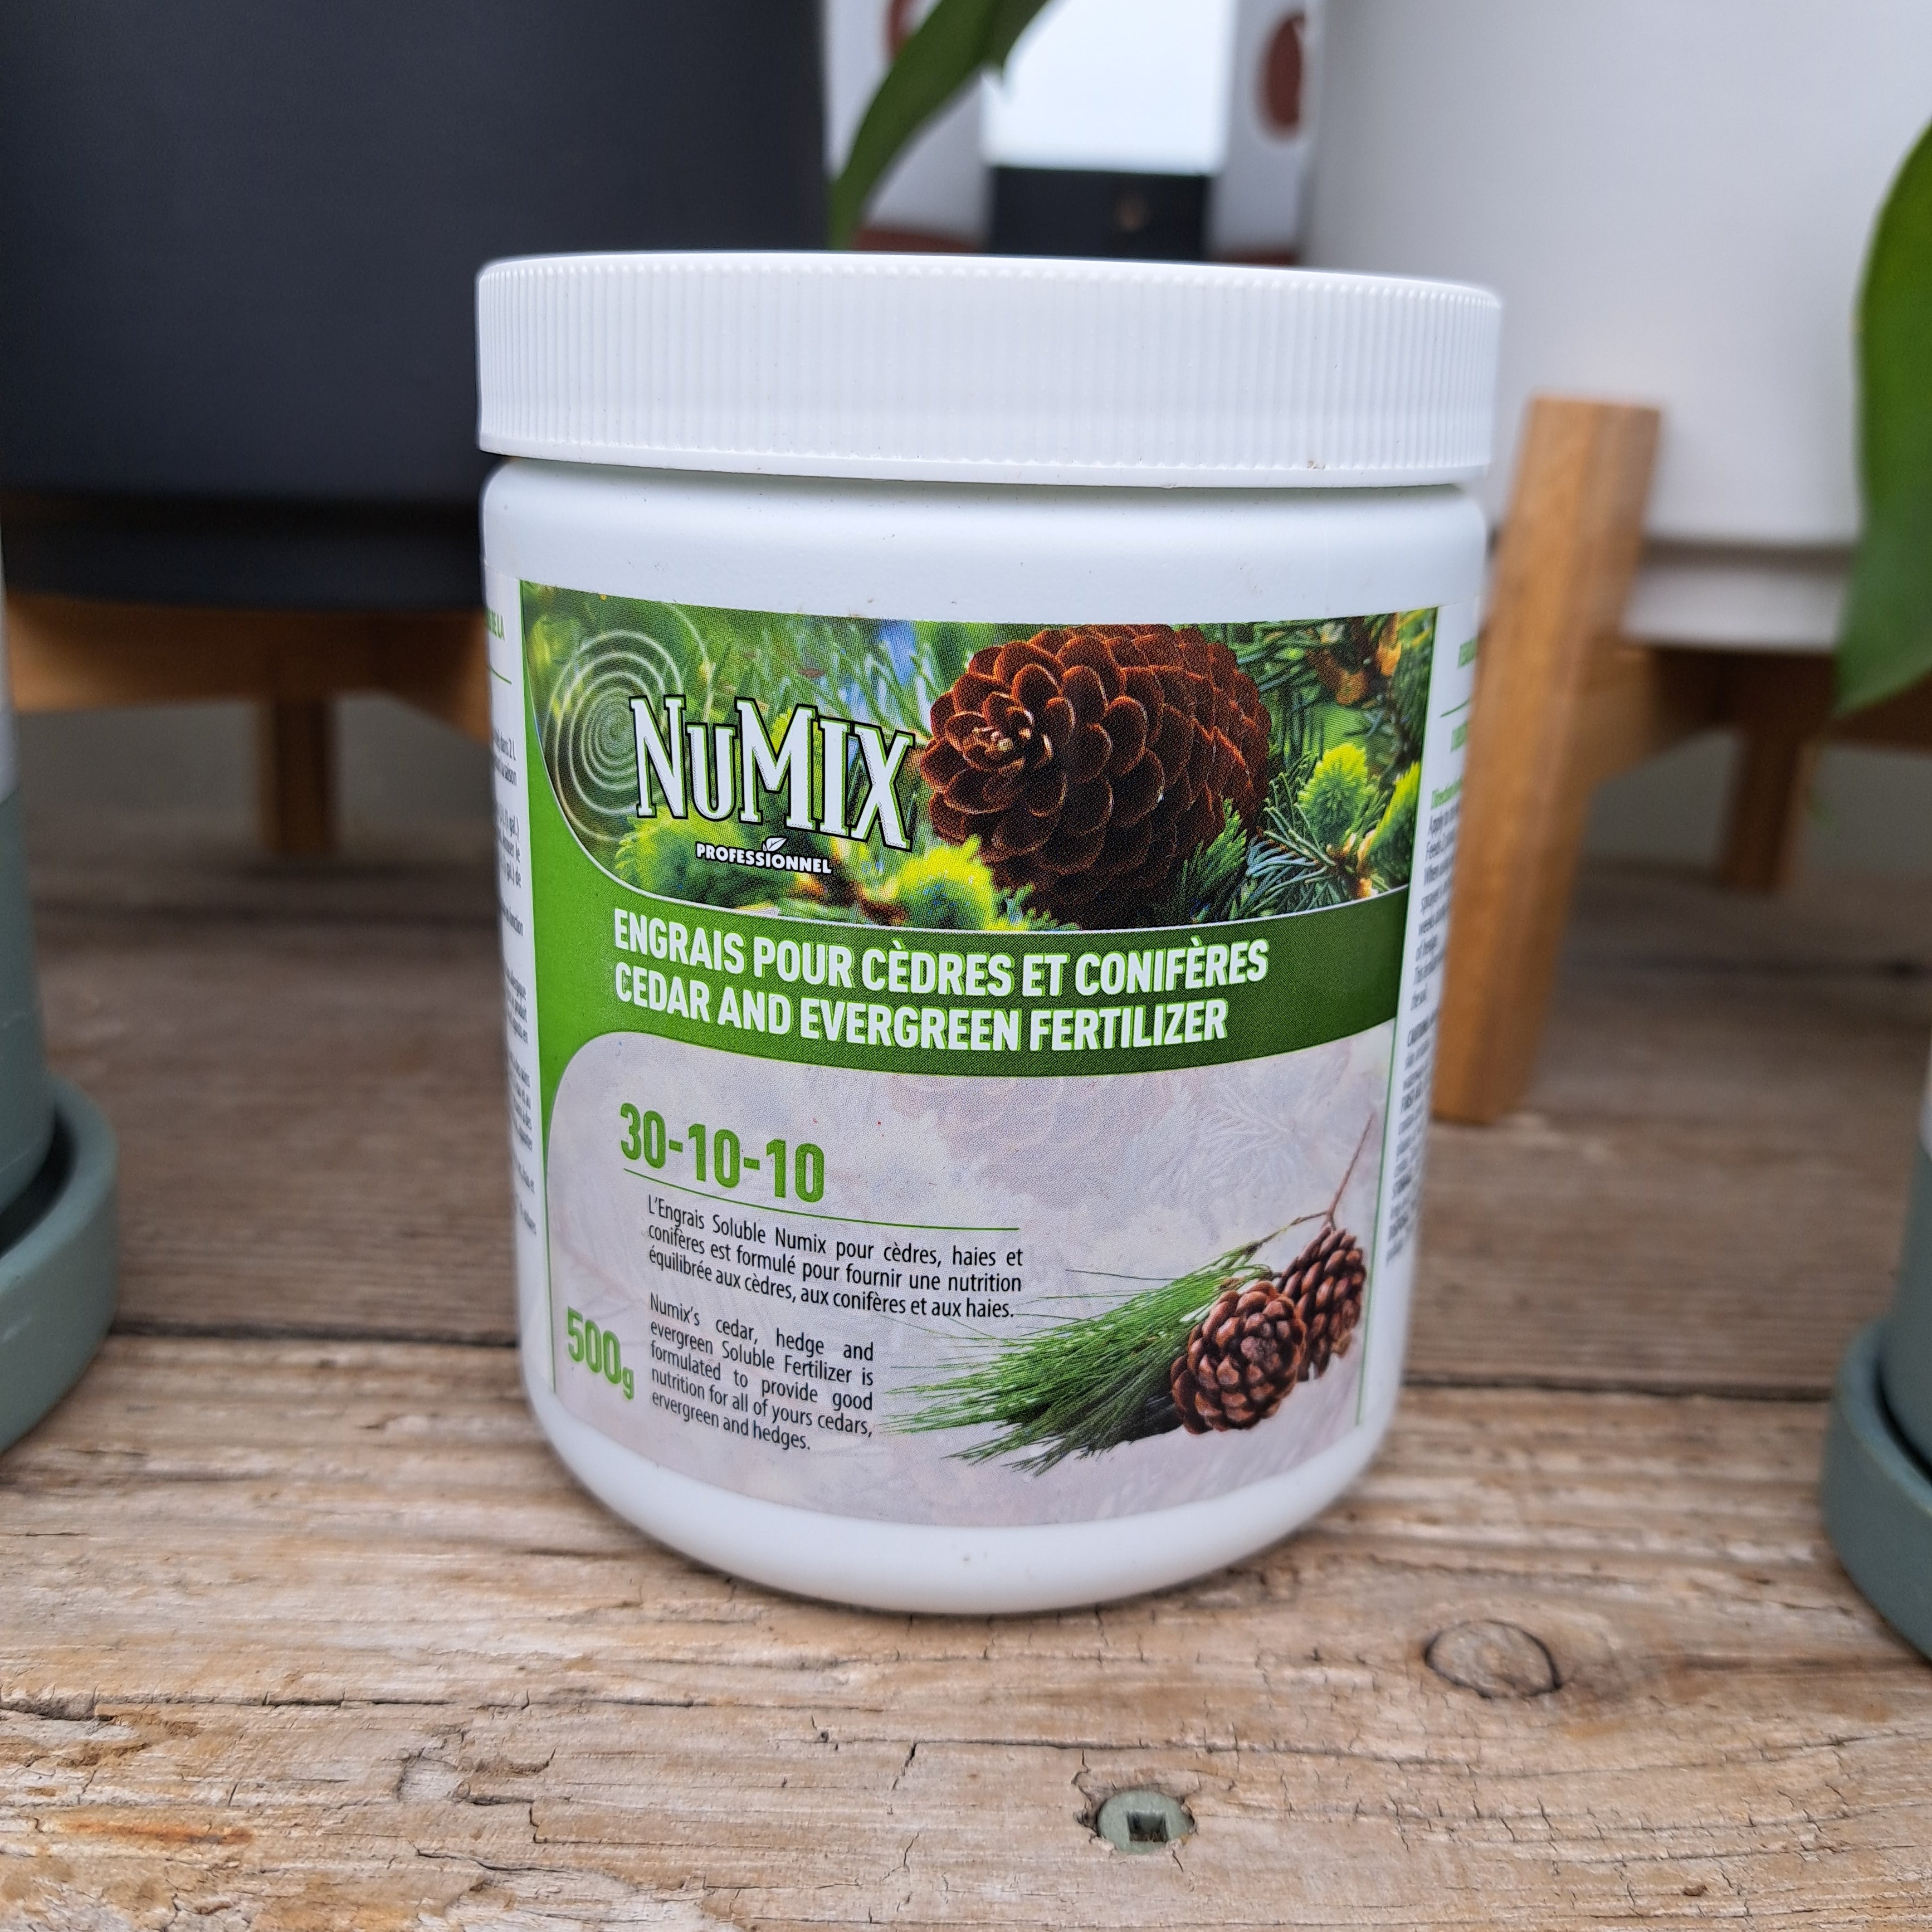 Numix fertilizer for cedars and conifers